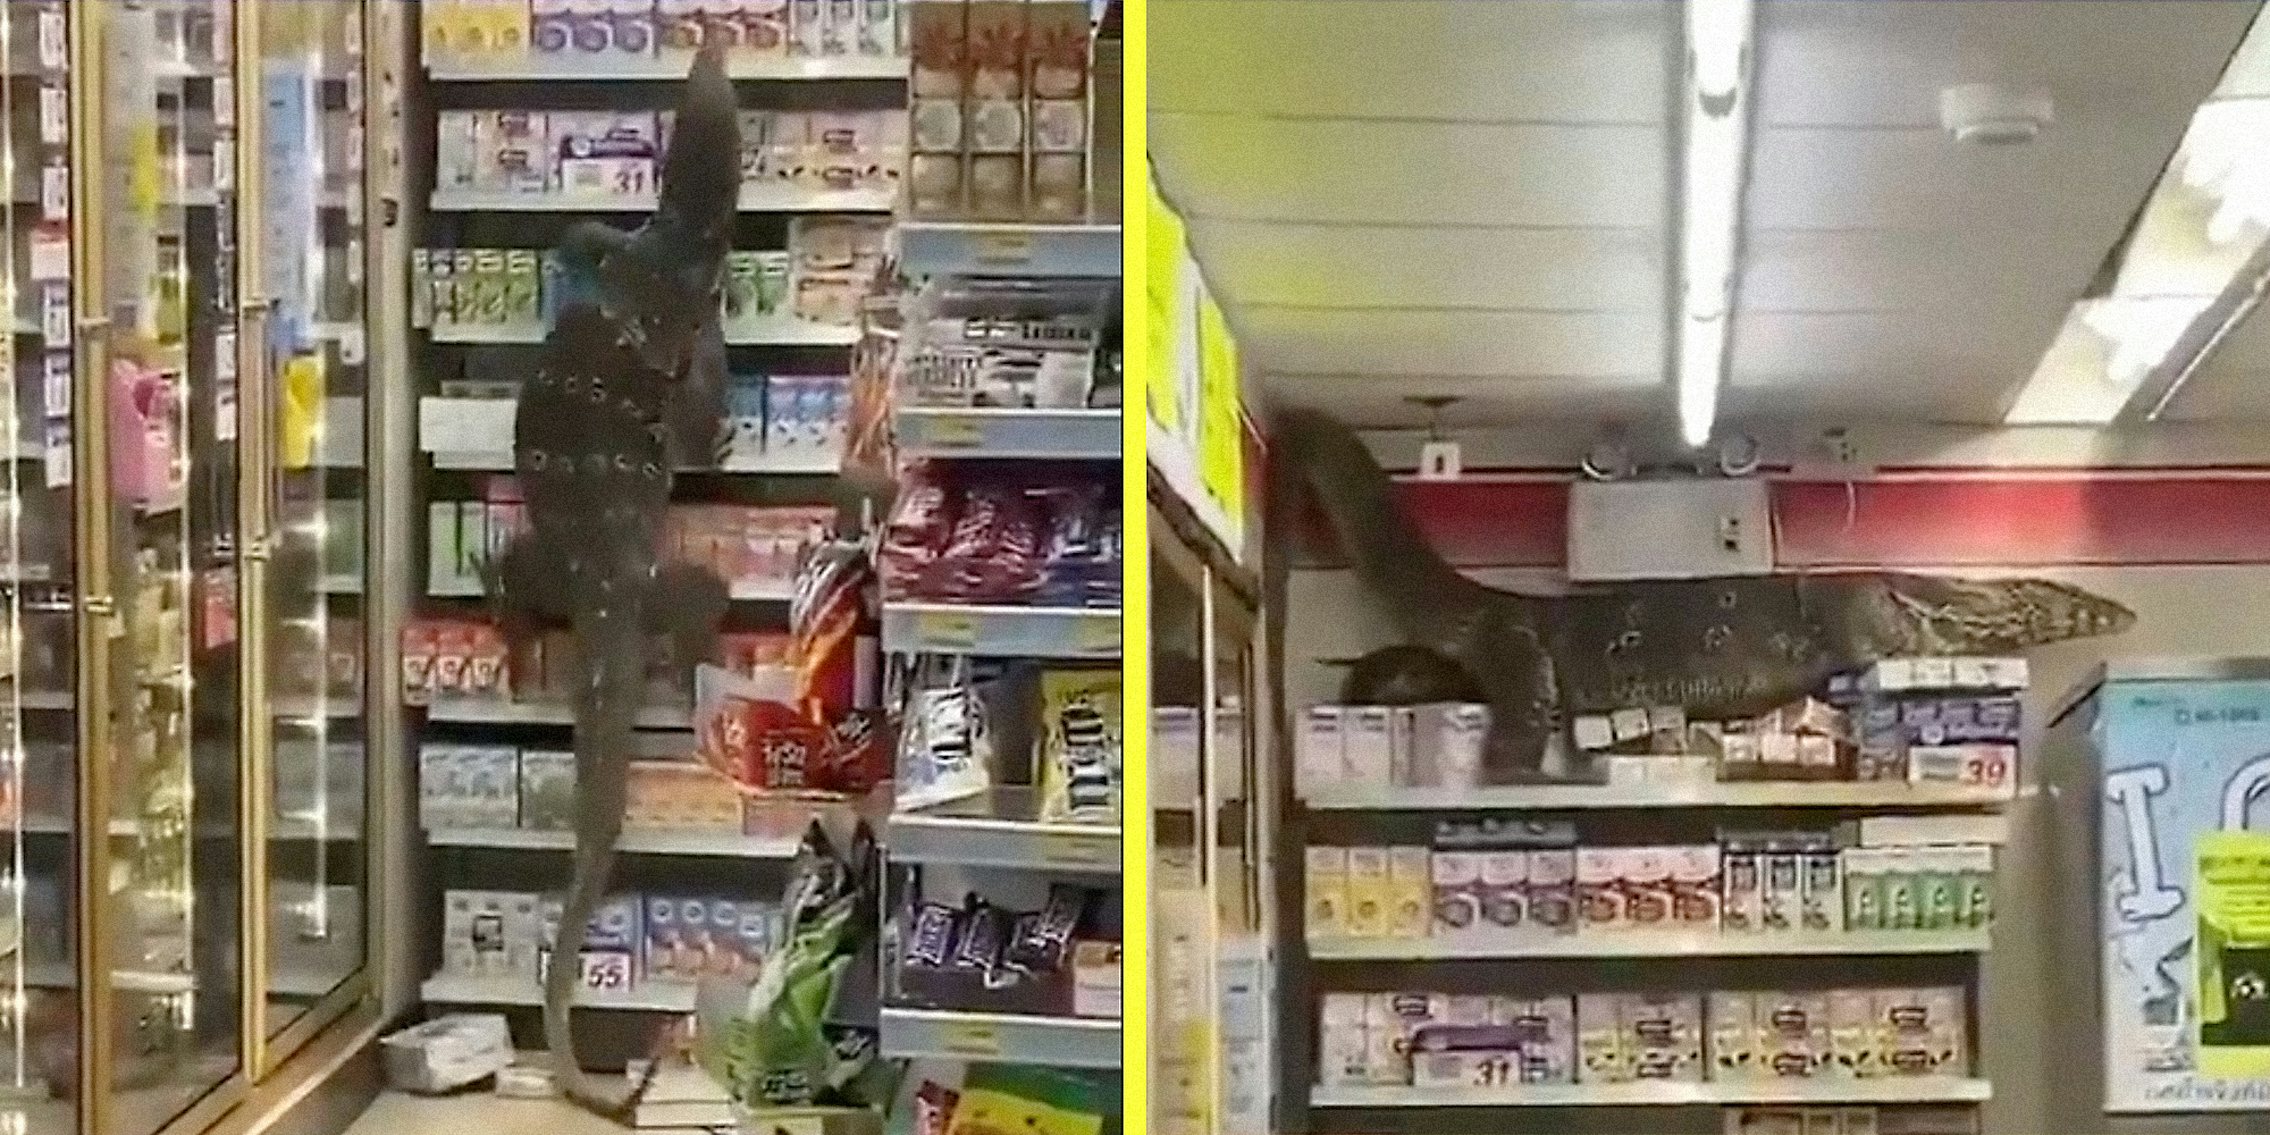 A lizard climbs up the shelf in a convenience store.